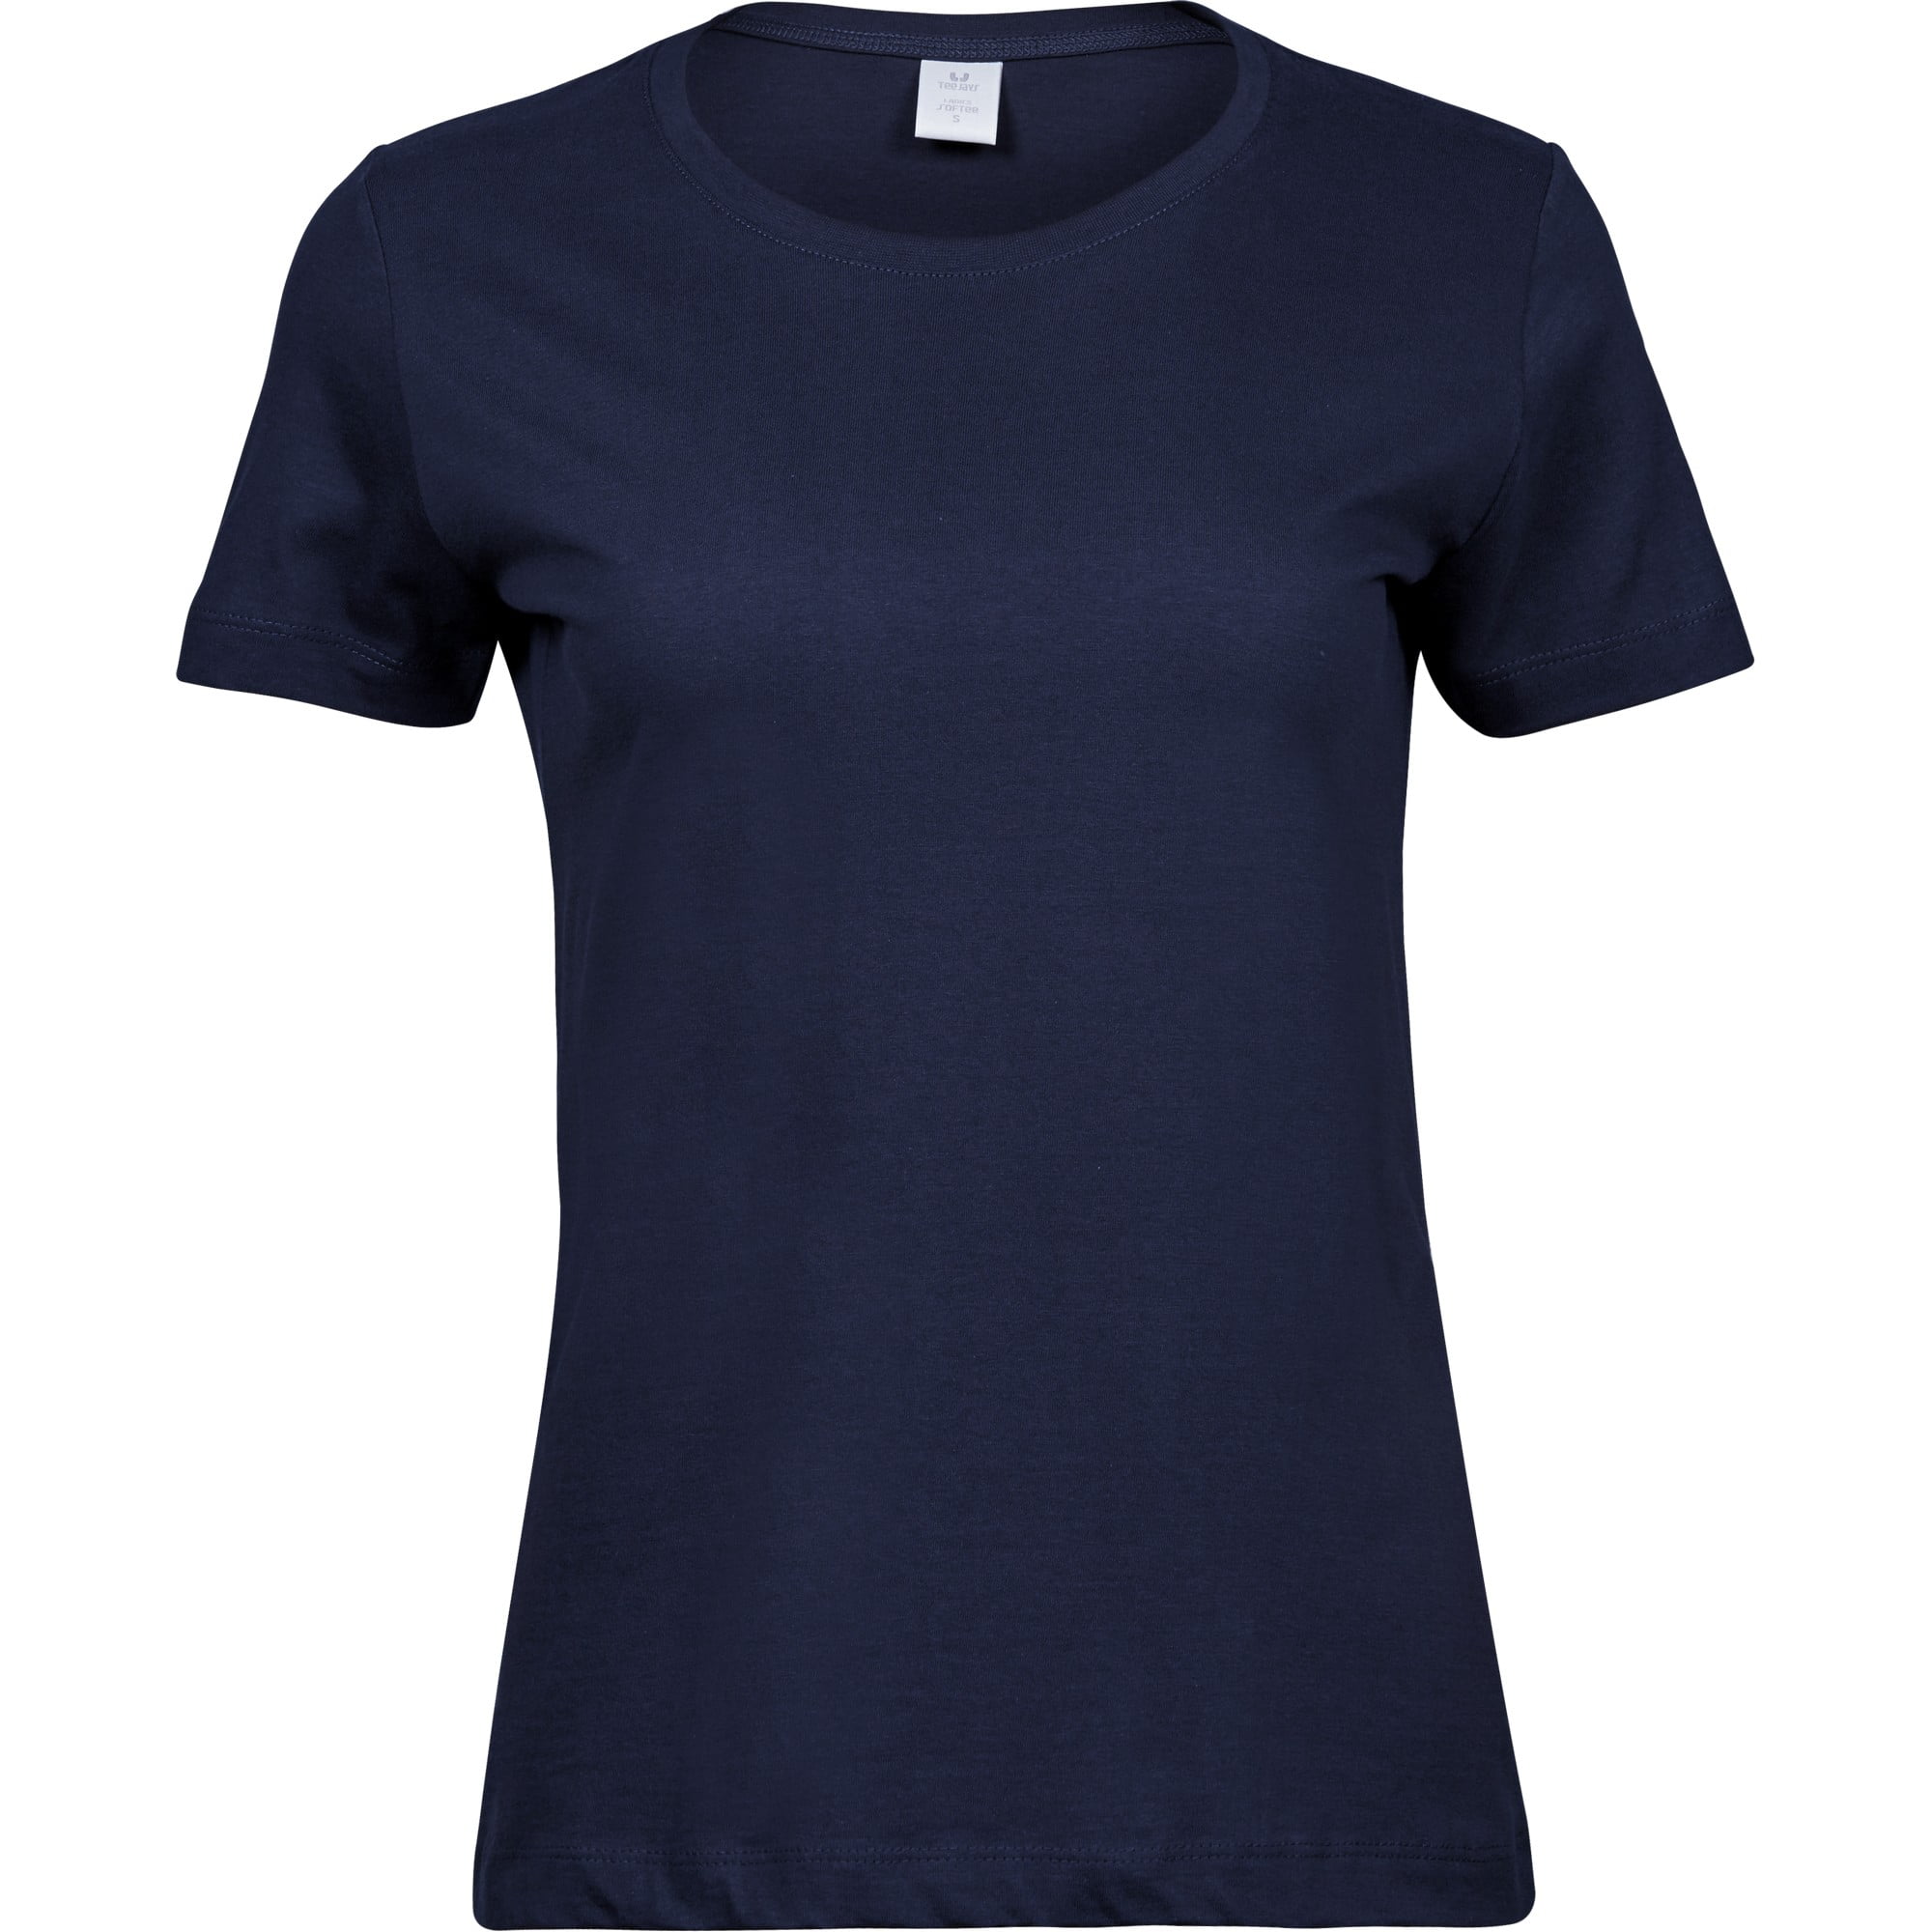 TEE JAYS - Tee Jays Womens Sof T-Shirt - Walmart.com - Walmart.com